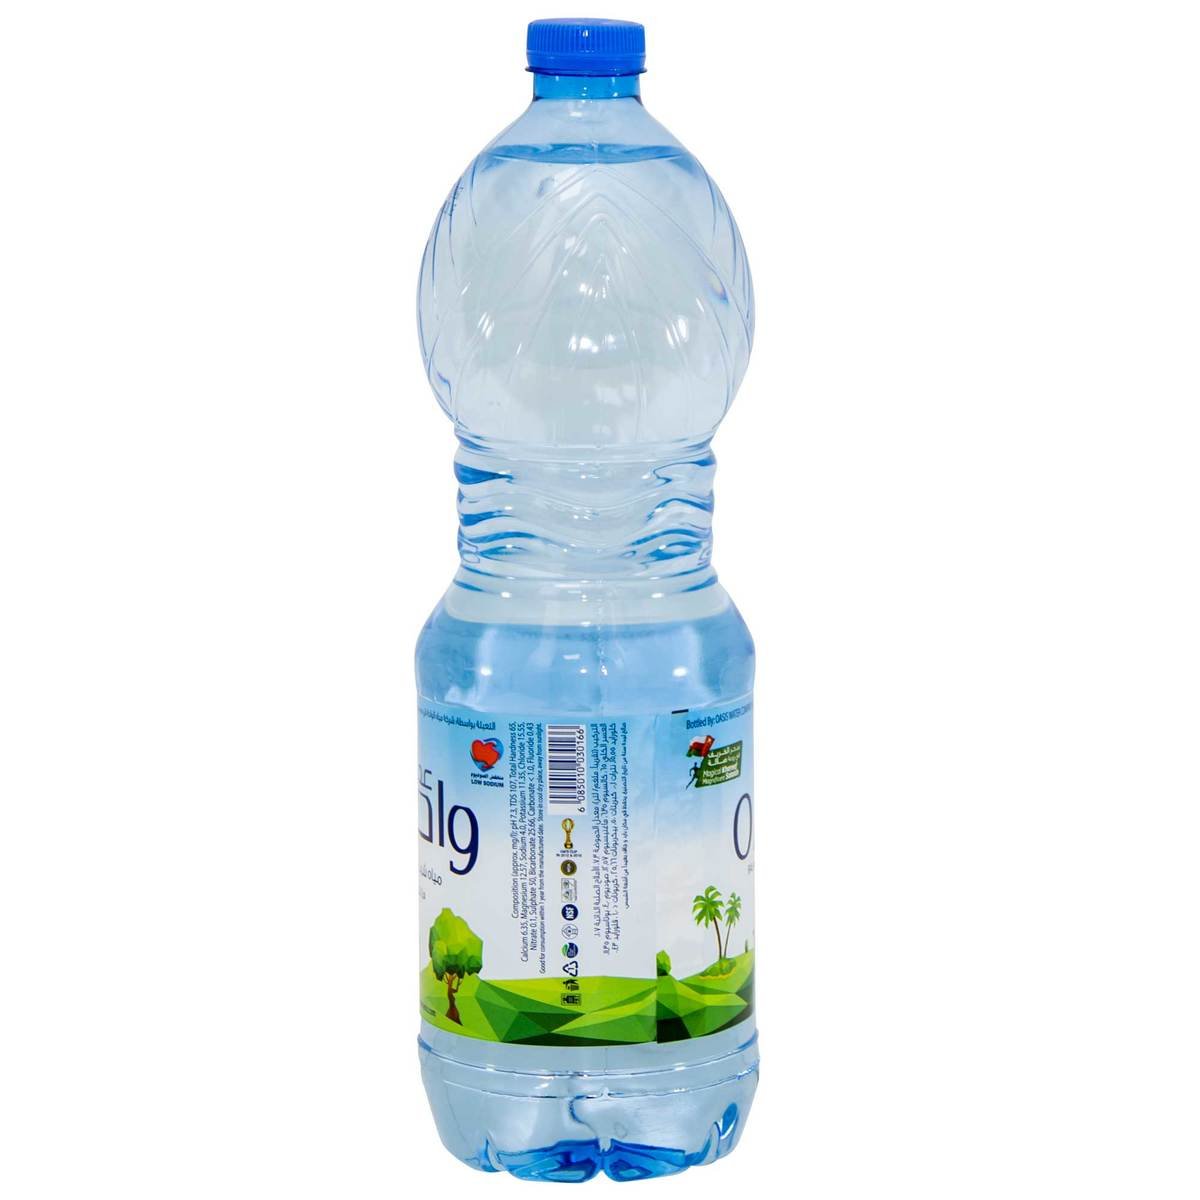 Oman Oasis Balanced Drinking Water 6 x 1.5Litre